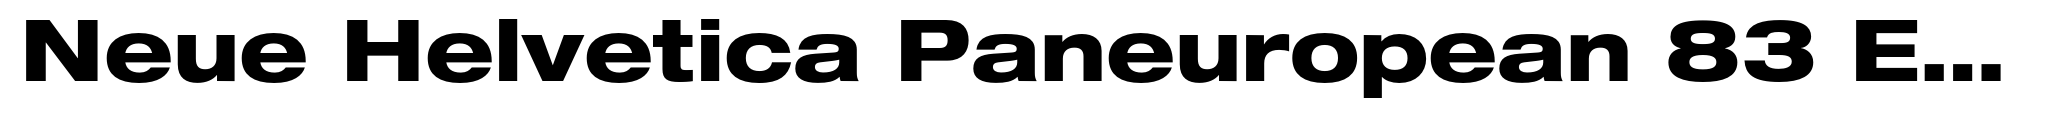 Neue Helvetica Paneuropean 83 Extended Heavy image